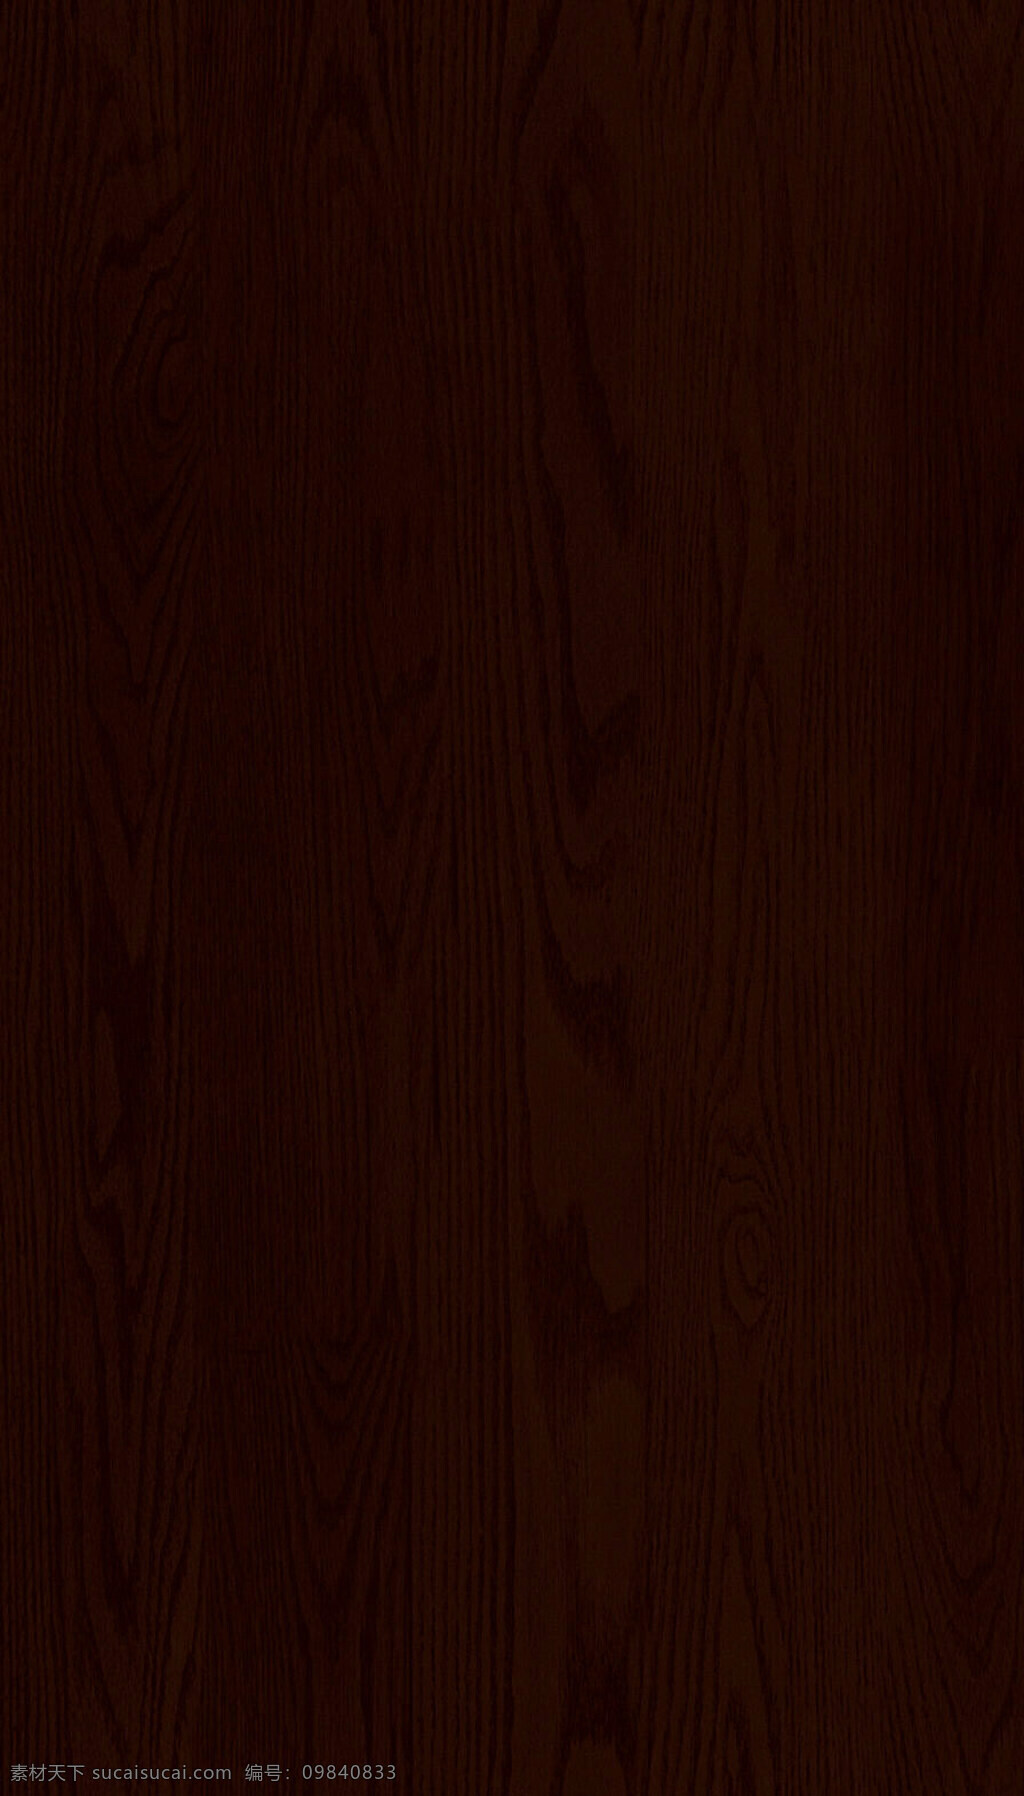 vray 木纹 材质 max9 光滑 木材 有贴图 抛光 暗棕色 3d模型素材 材质贴图